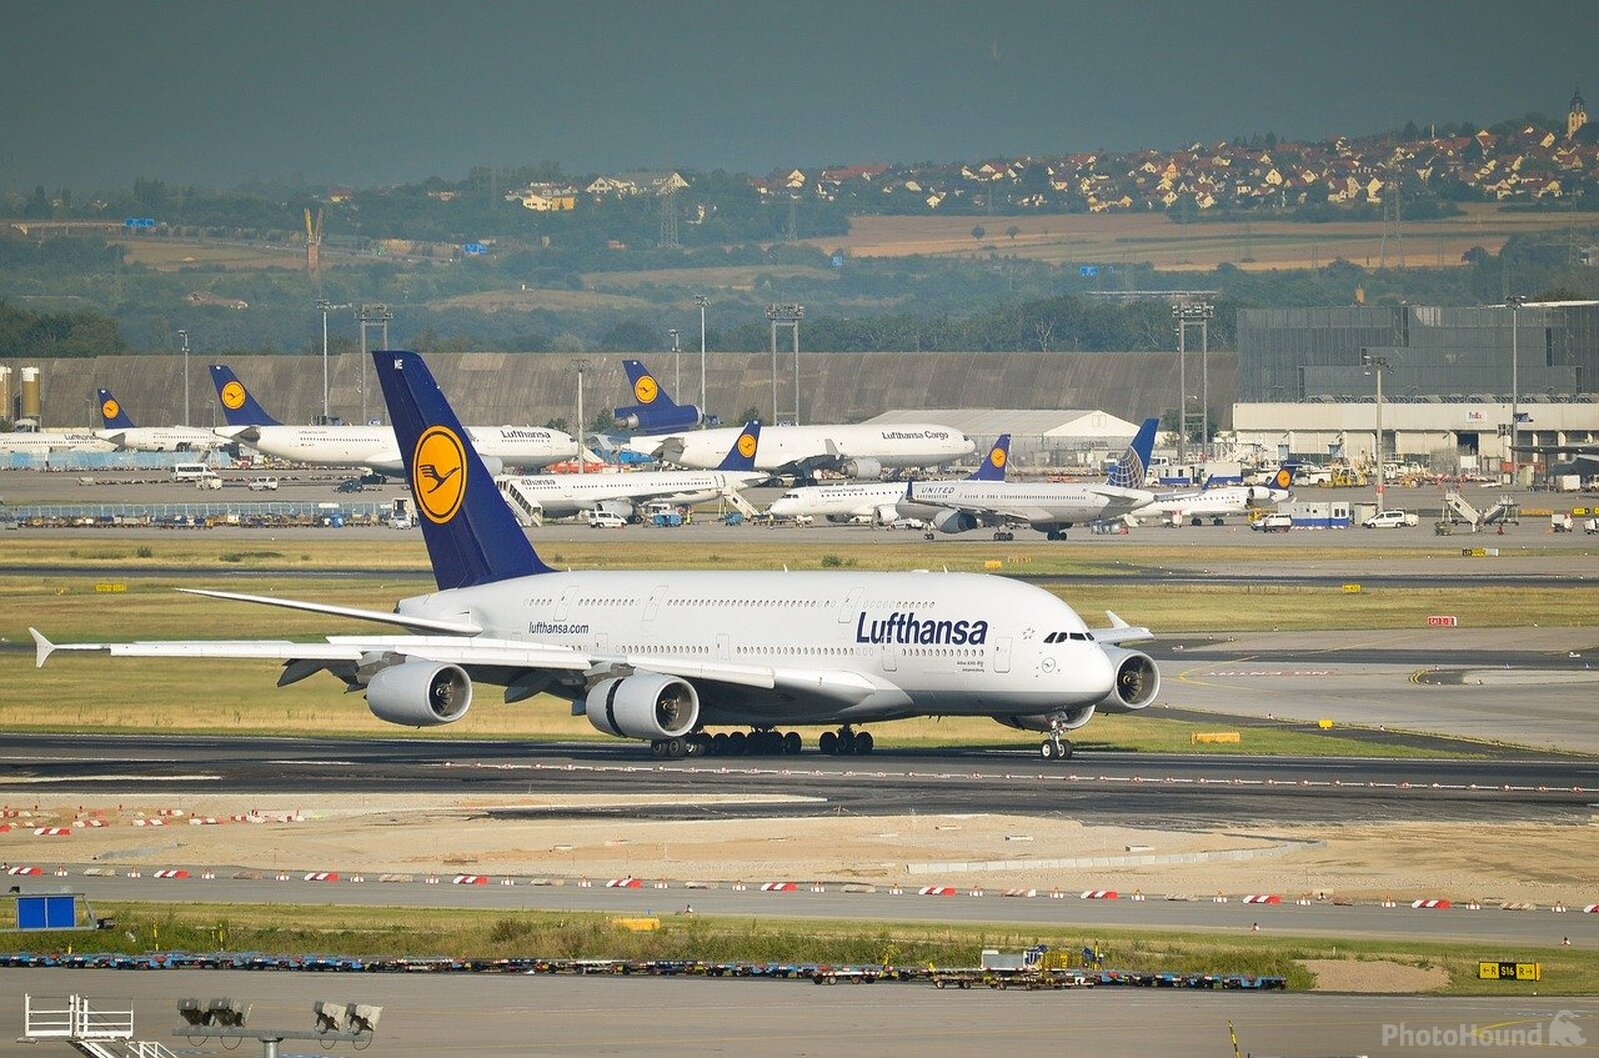 Image of Frankfurt Airport by Team PhotoHound